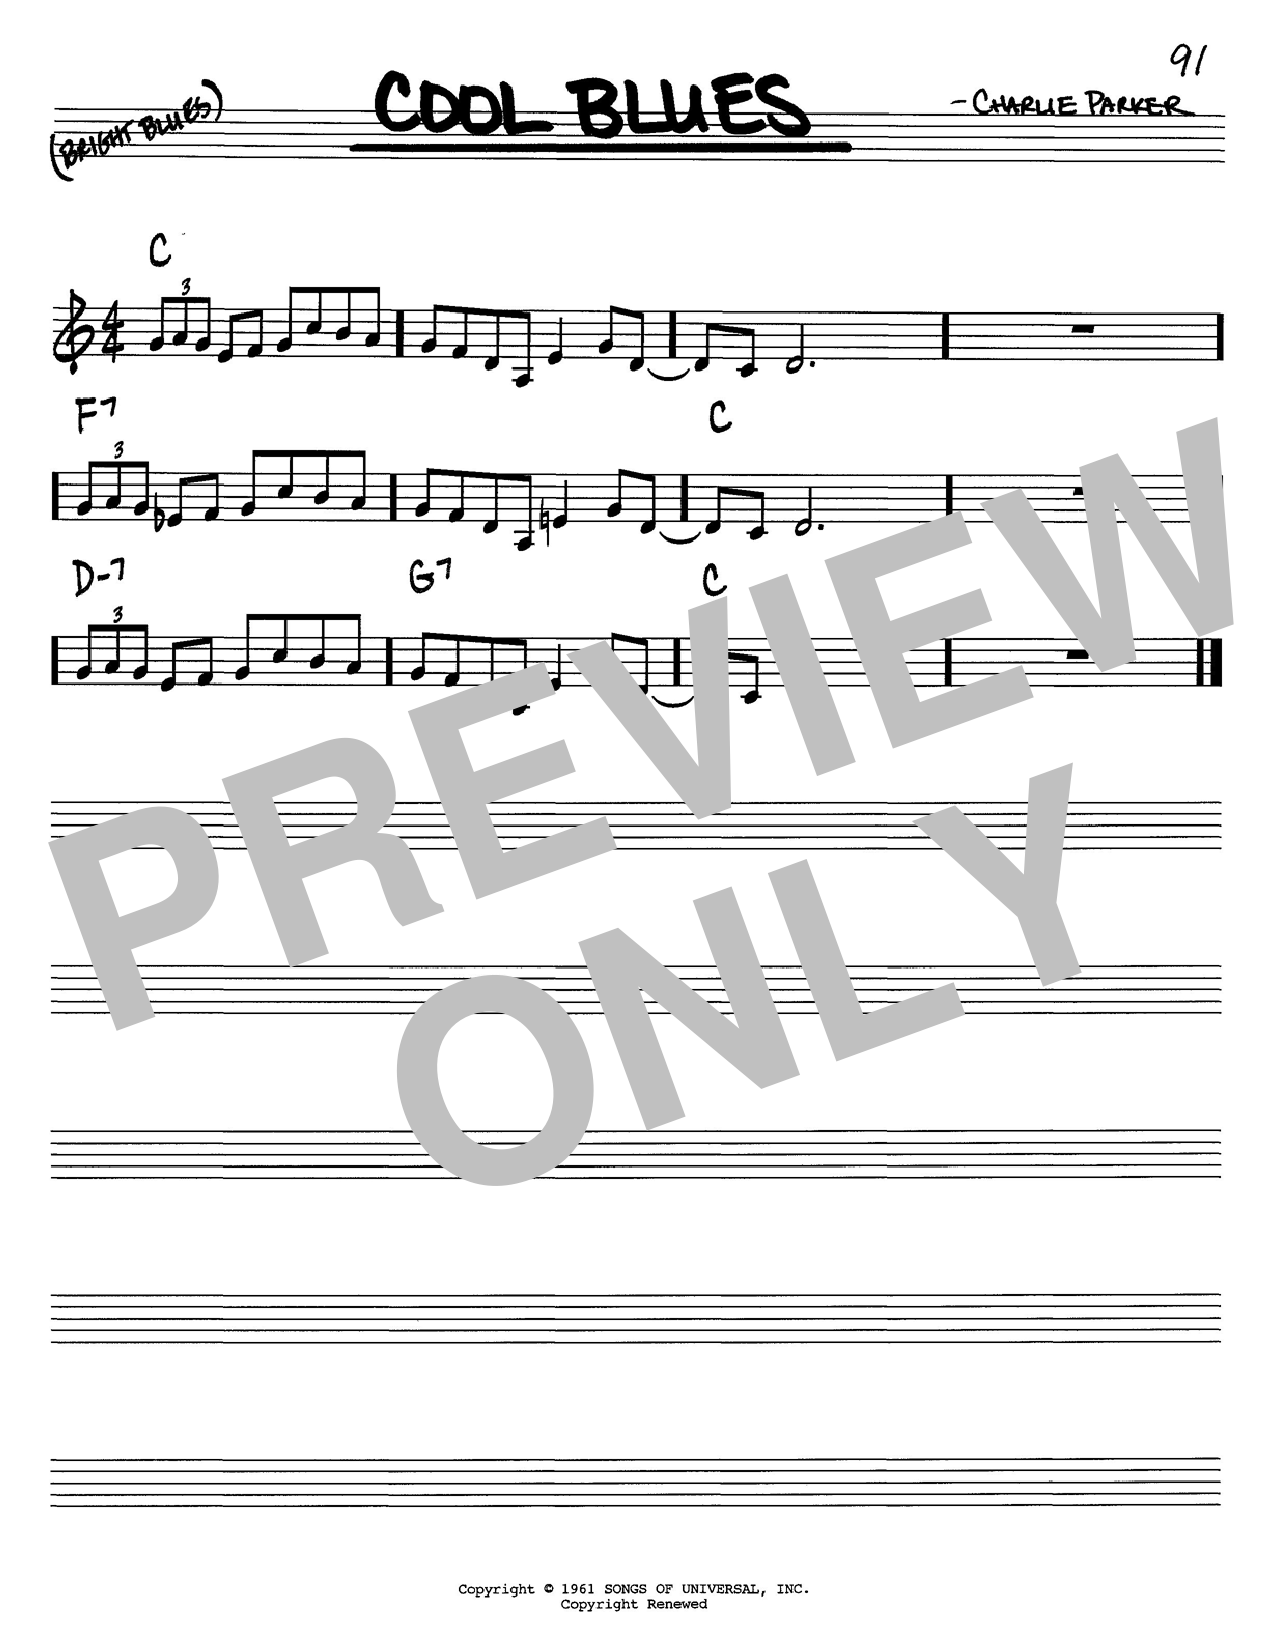 Charlie Parker Cool Blues Sheet Music Notes Chords Alto Sax